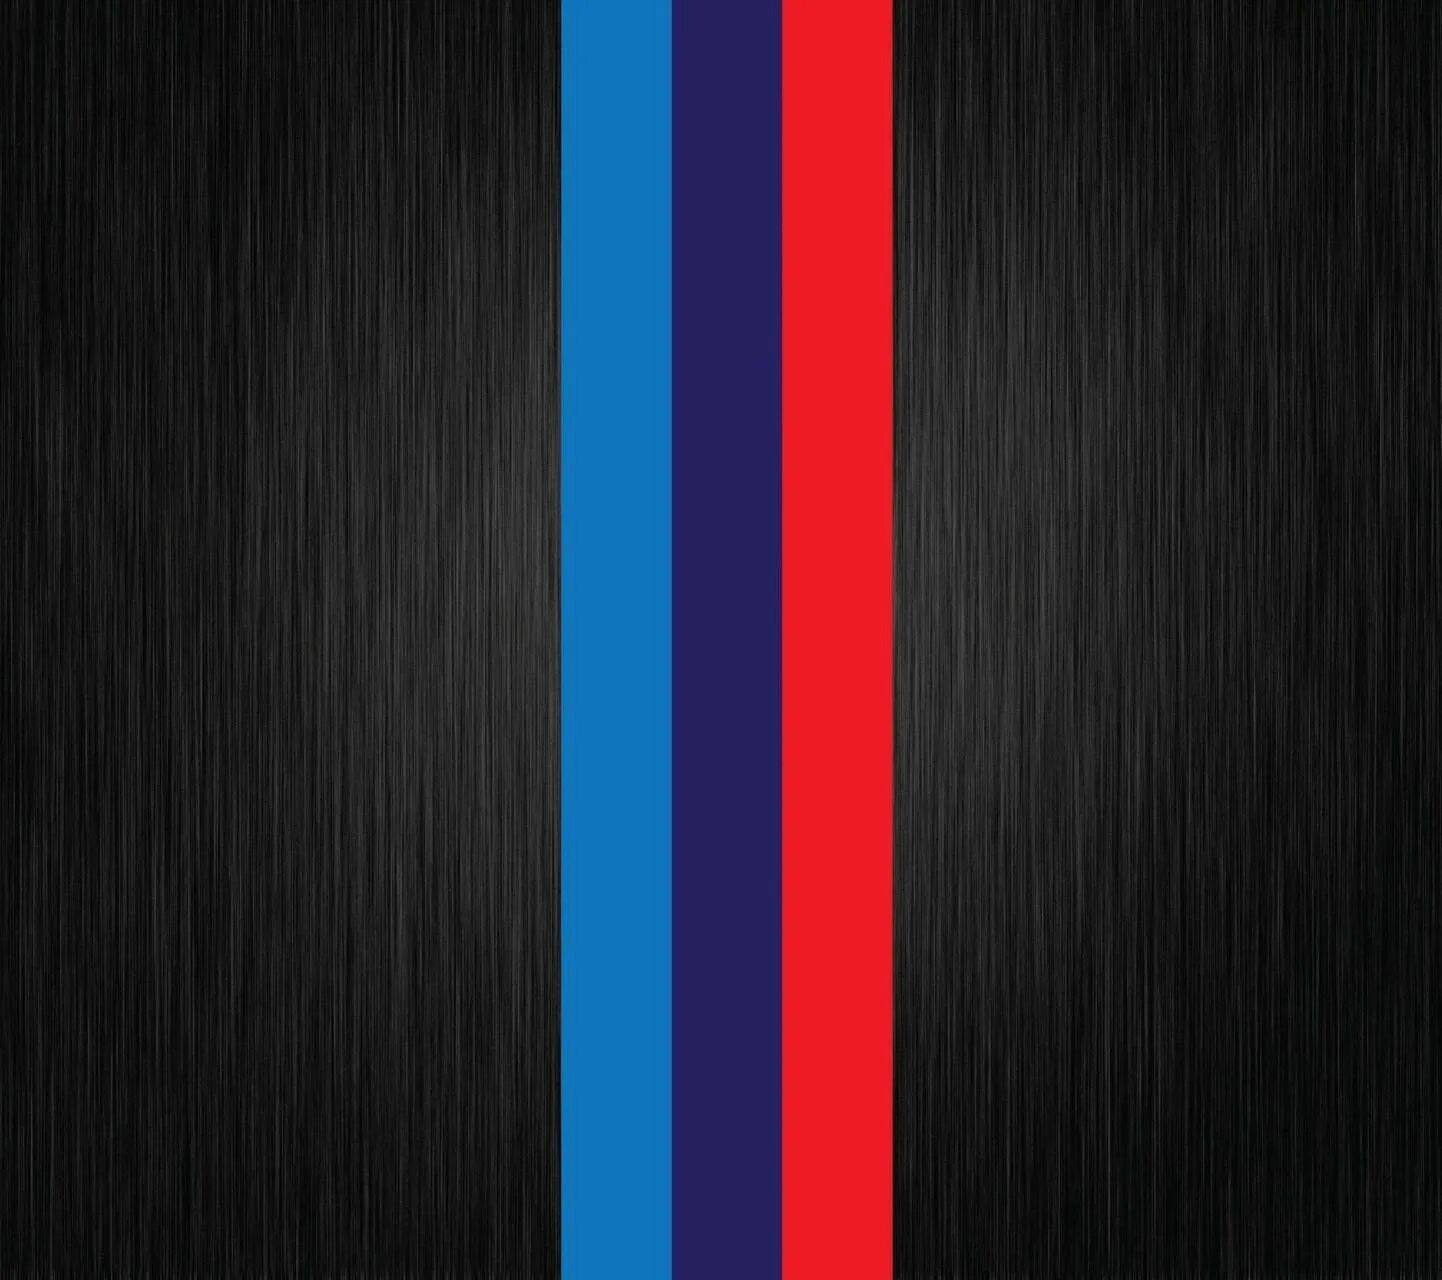 Bmw m power. BMW M флаг. Полоски БМВ м5. BMW M Series Color.